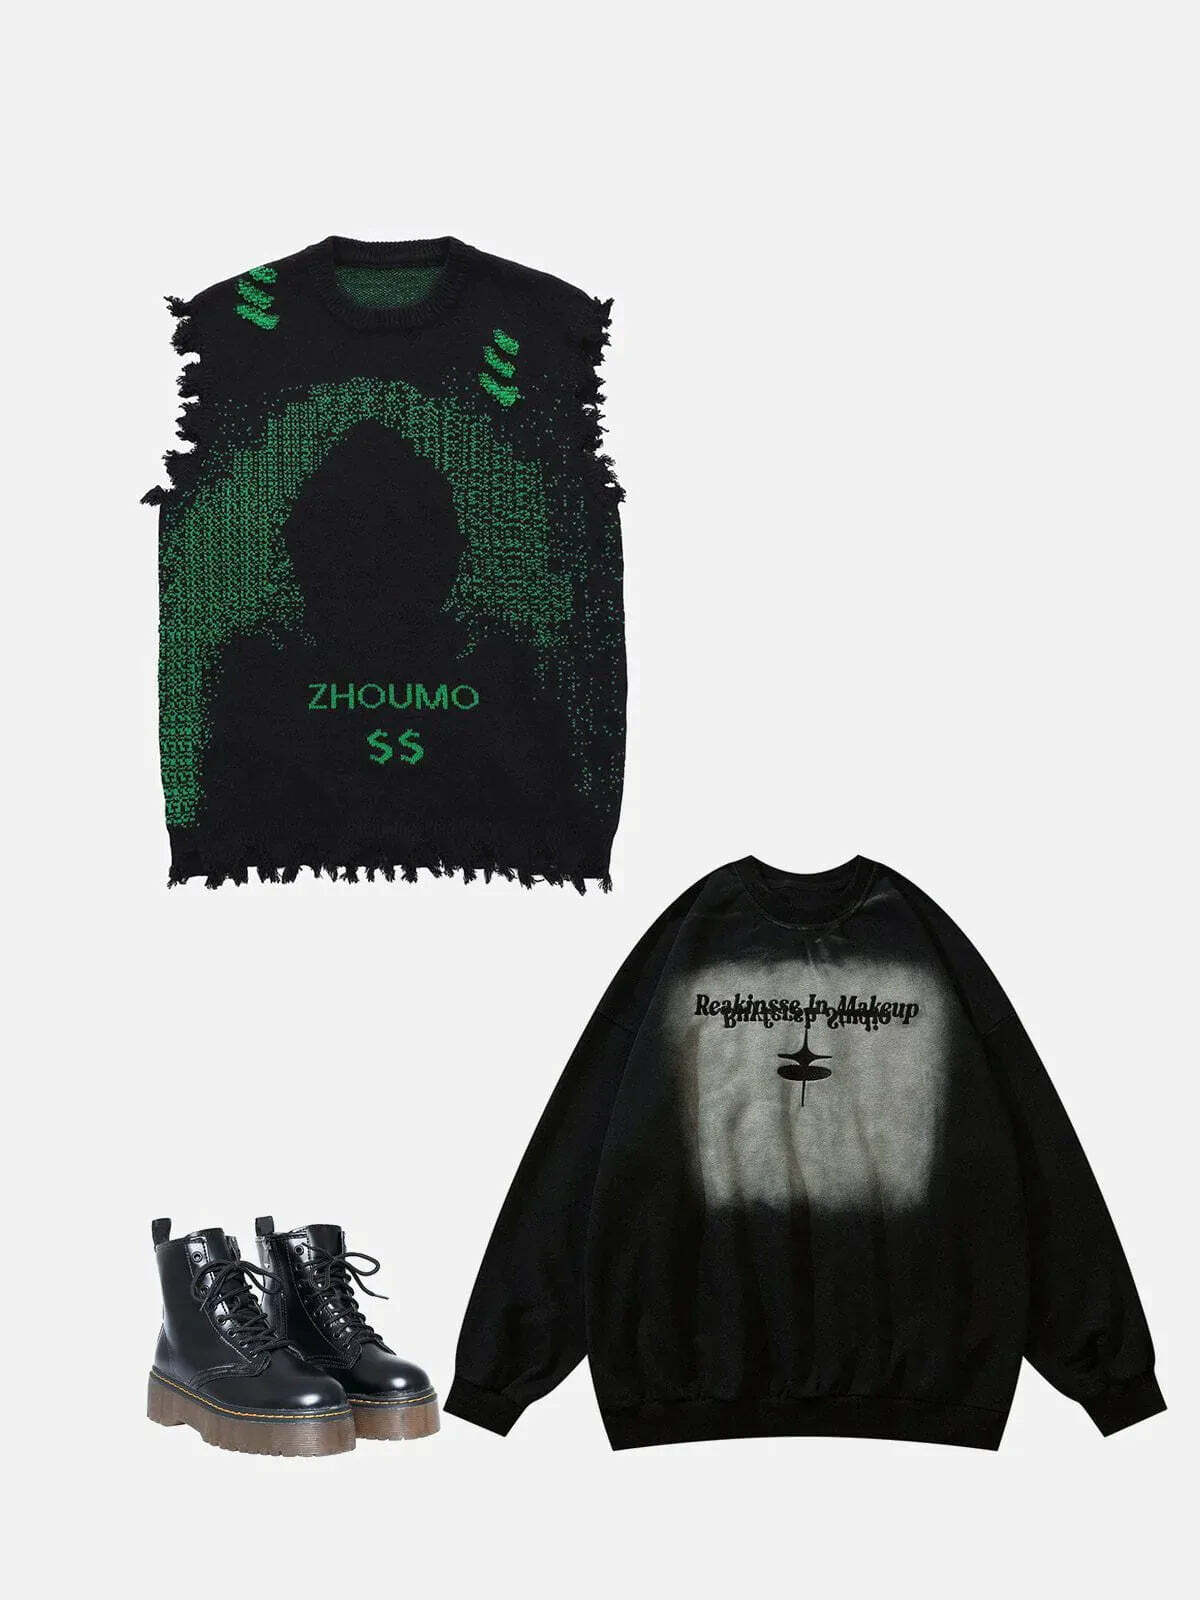 retro cyberpunk sweater edgy  urban dot matrix vest 7093